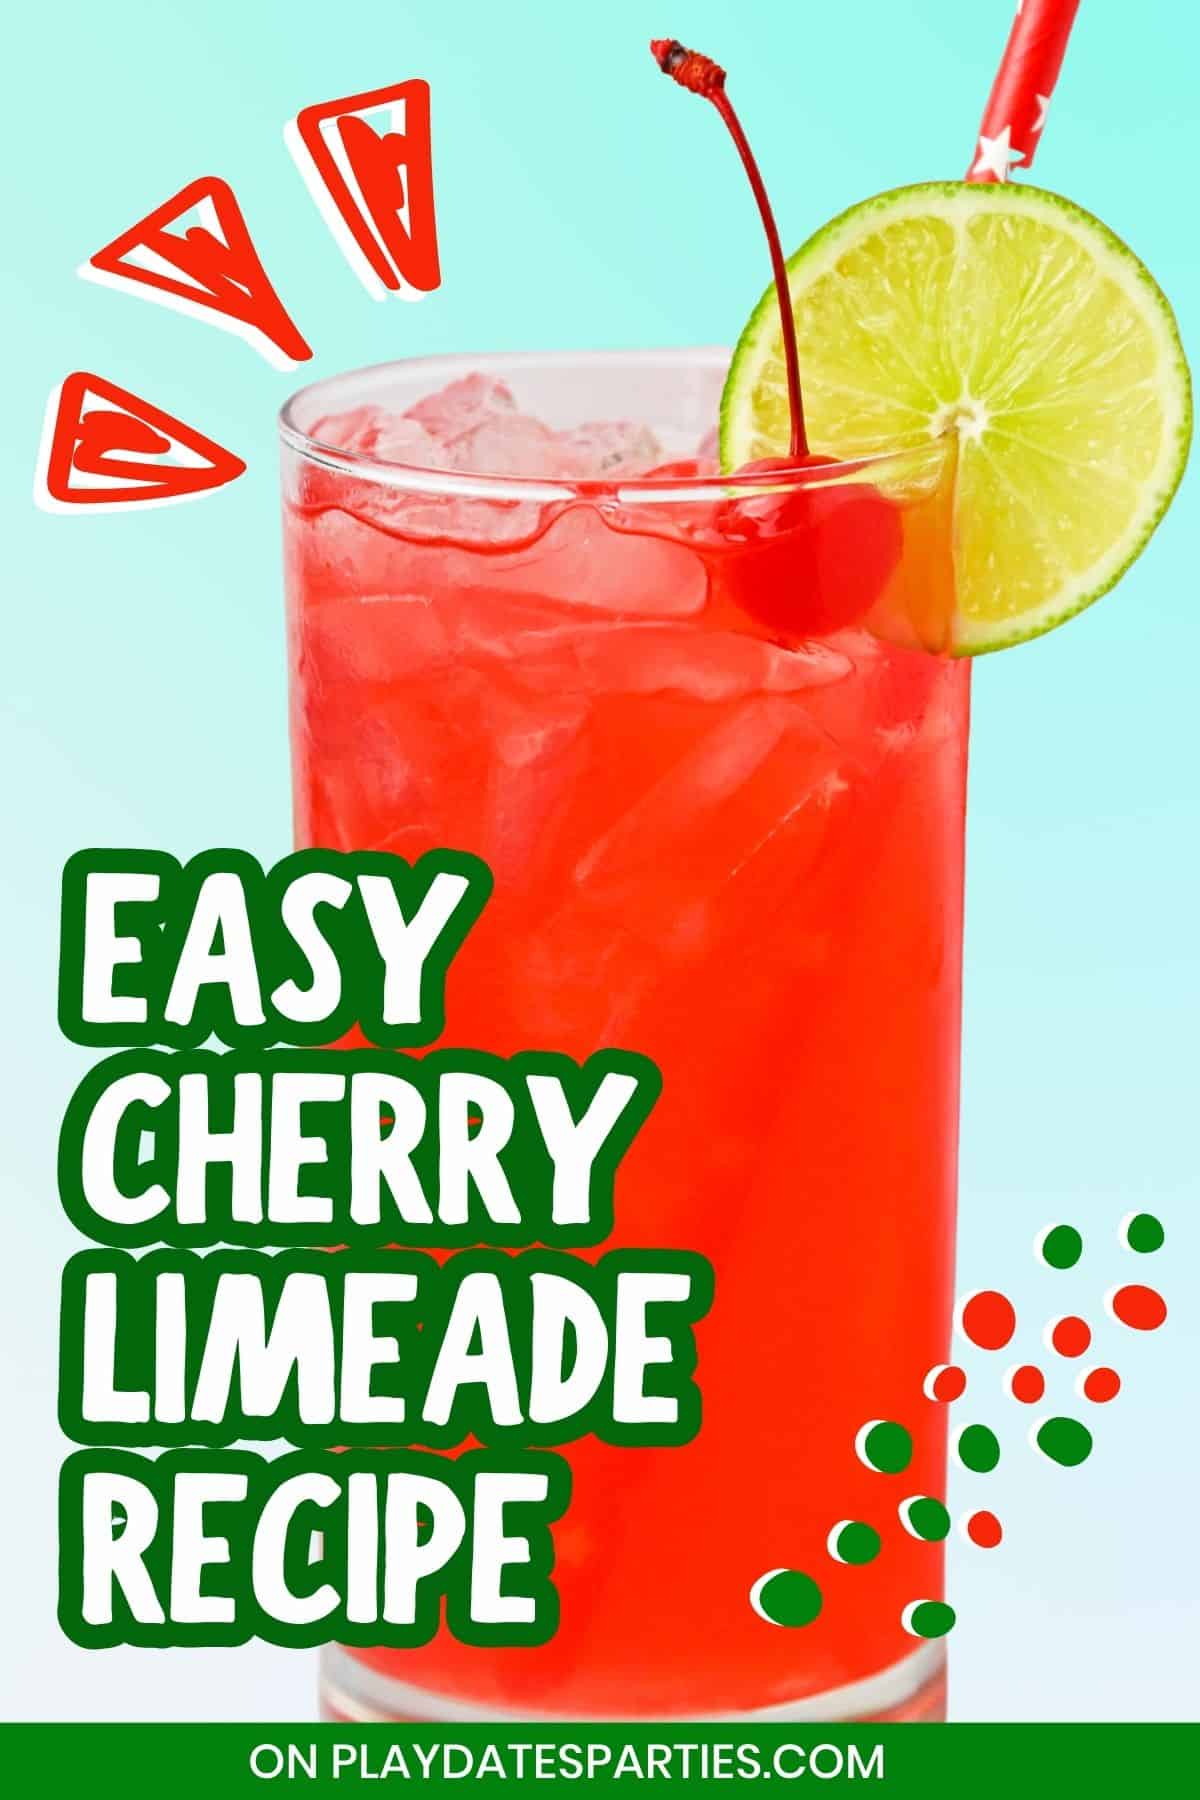 Easy cherry limeade recipe Pin image.